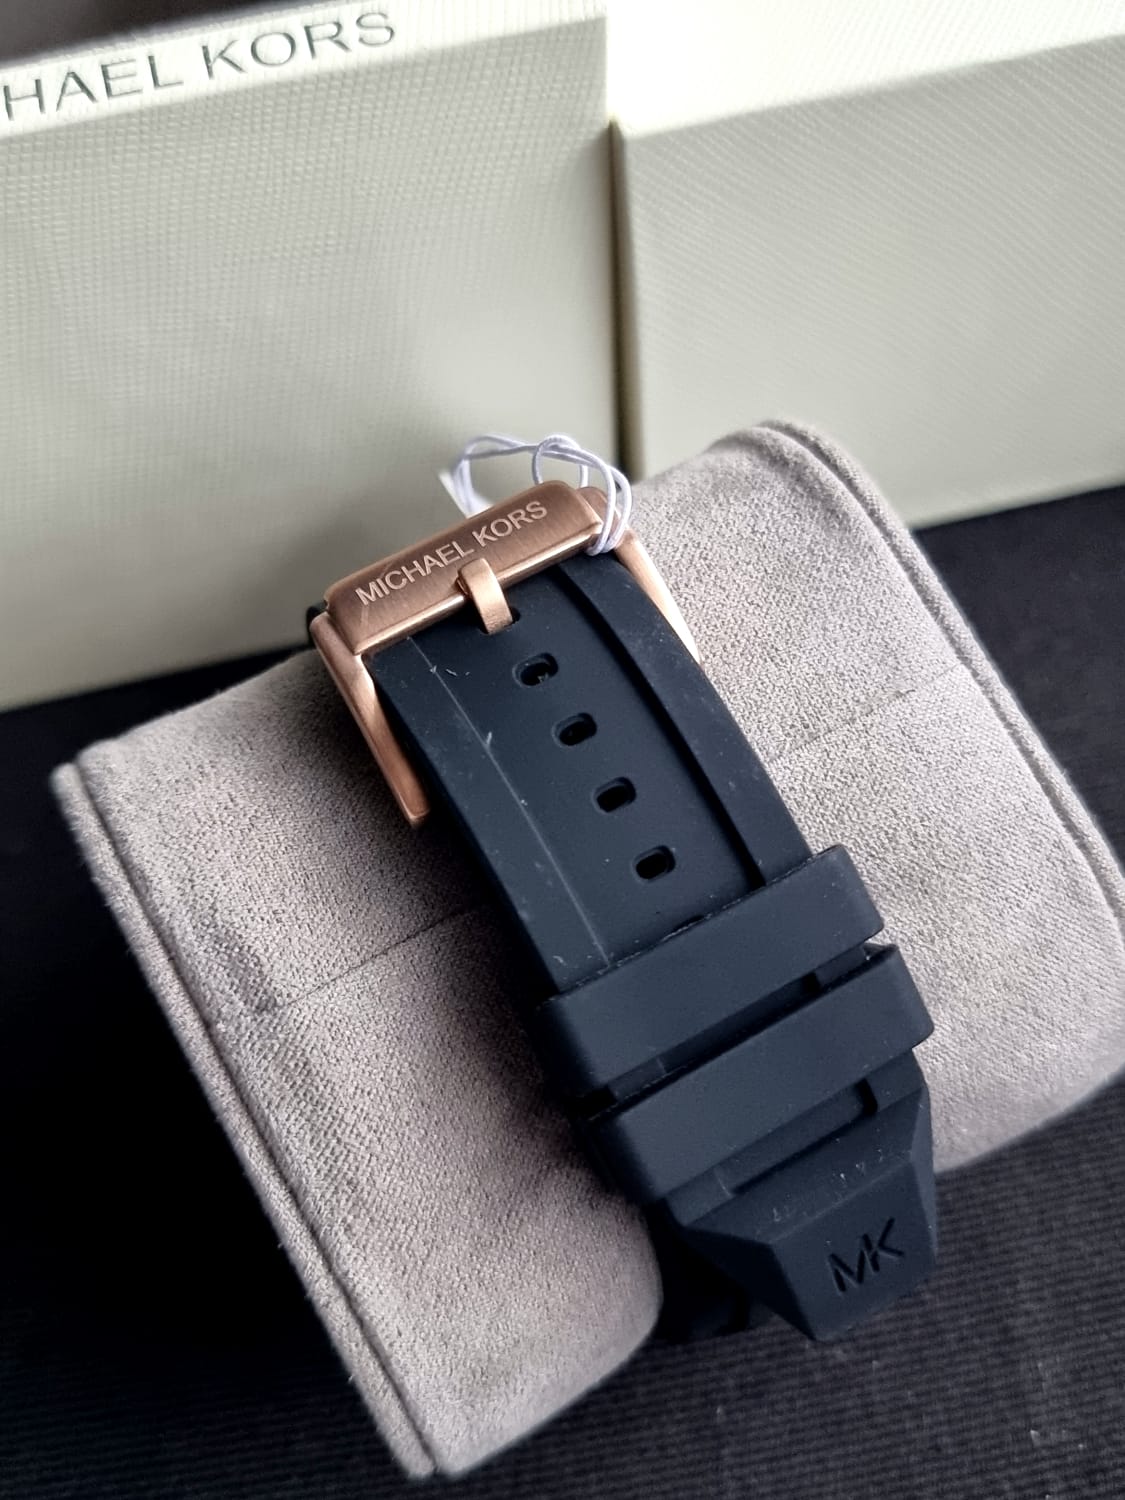 Michael Kors Men’s Chronograph Quartz Silicone Strap Black Dial 44mm Watch MK8436